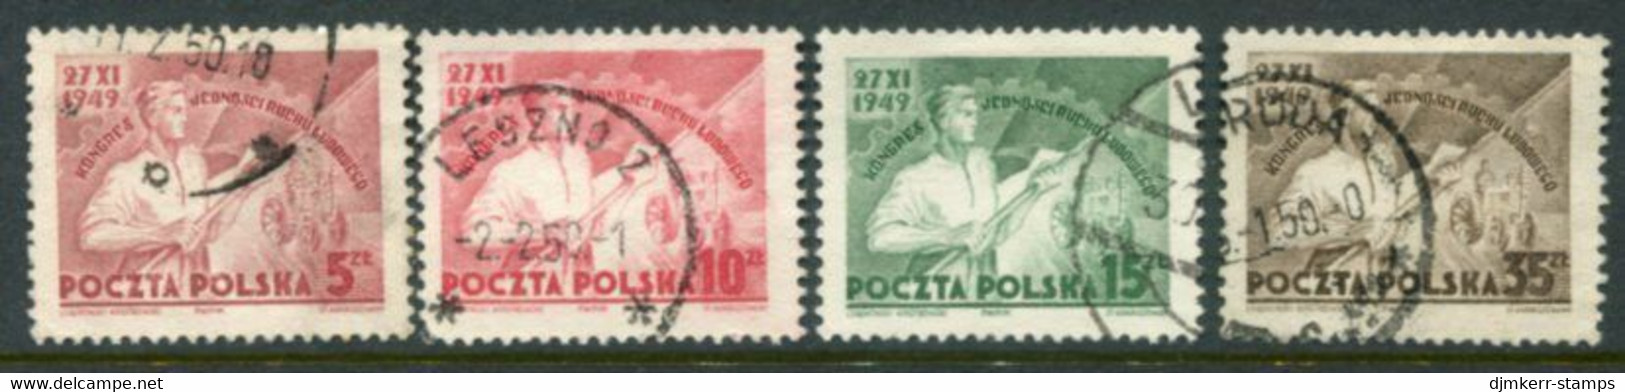 POLAND 1949  Peasant Movement Congress. Used.  Michel 539-42 - Gebraucht